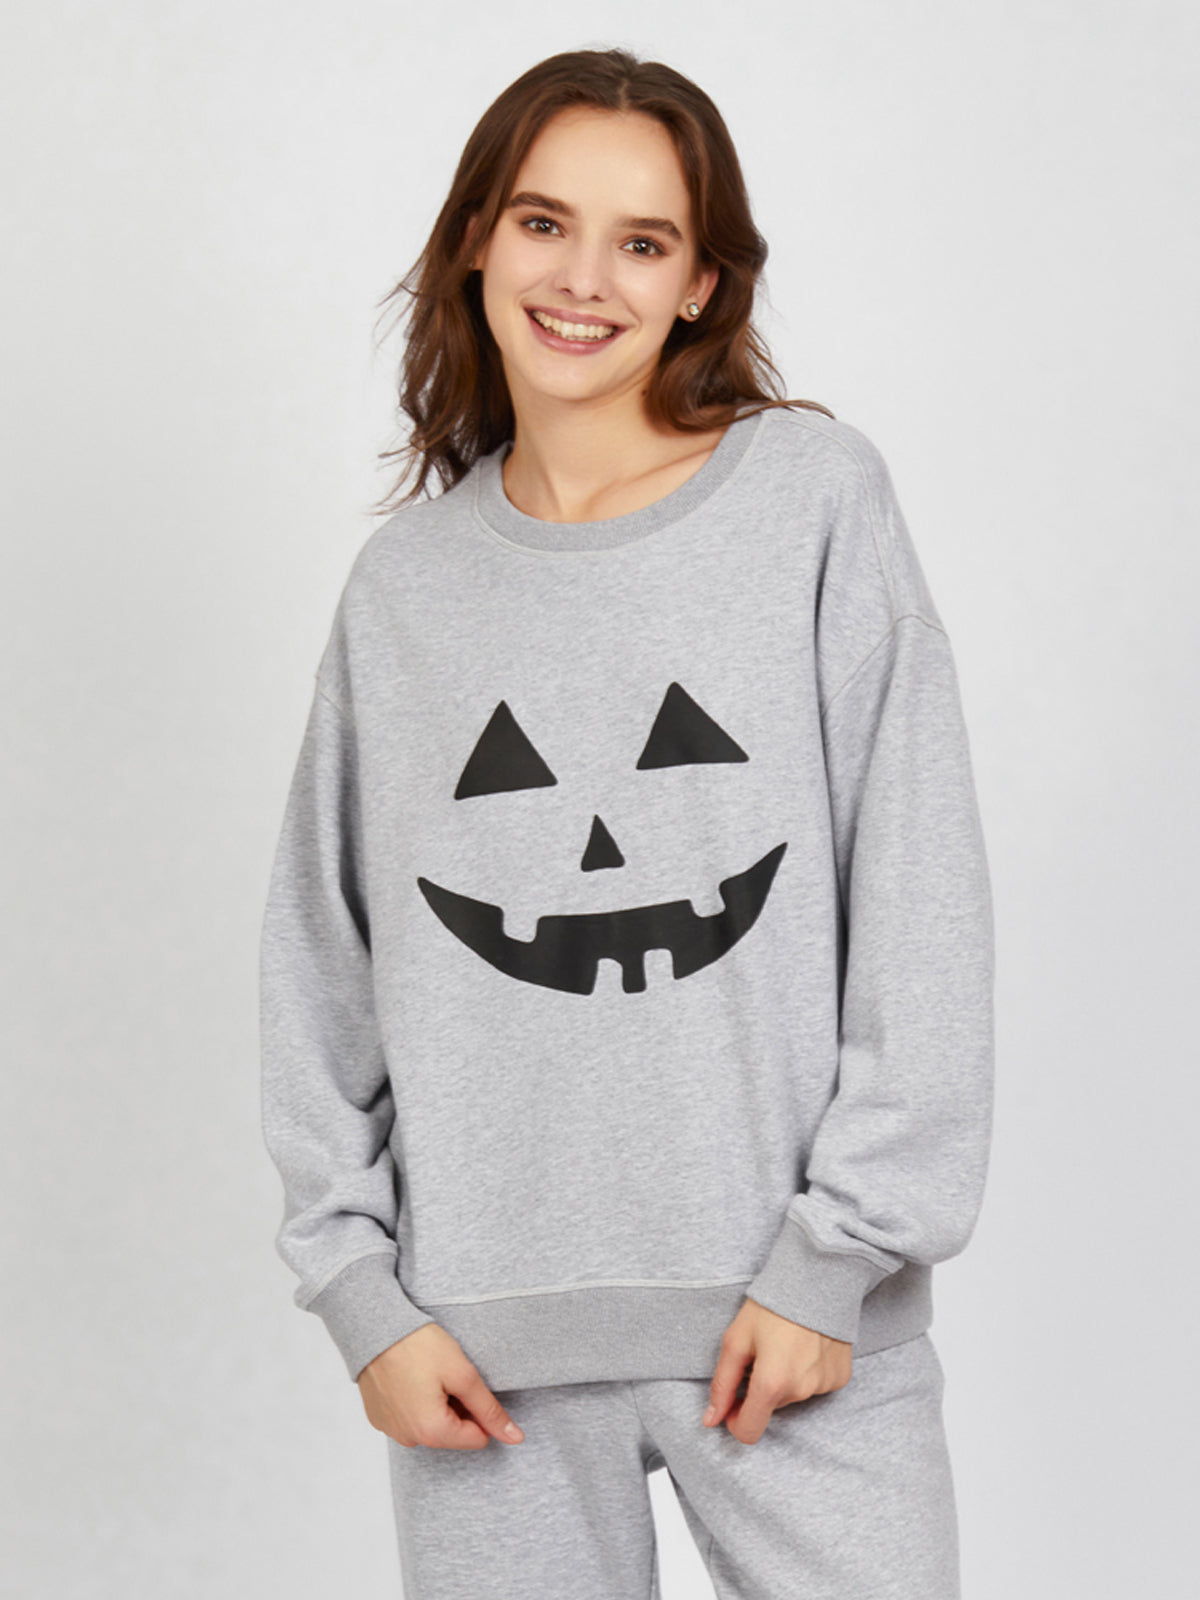 Jack O Lantern Graphic Sweatshirt